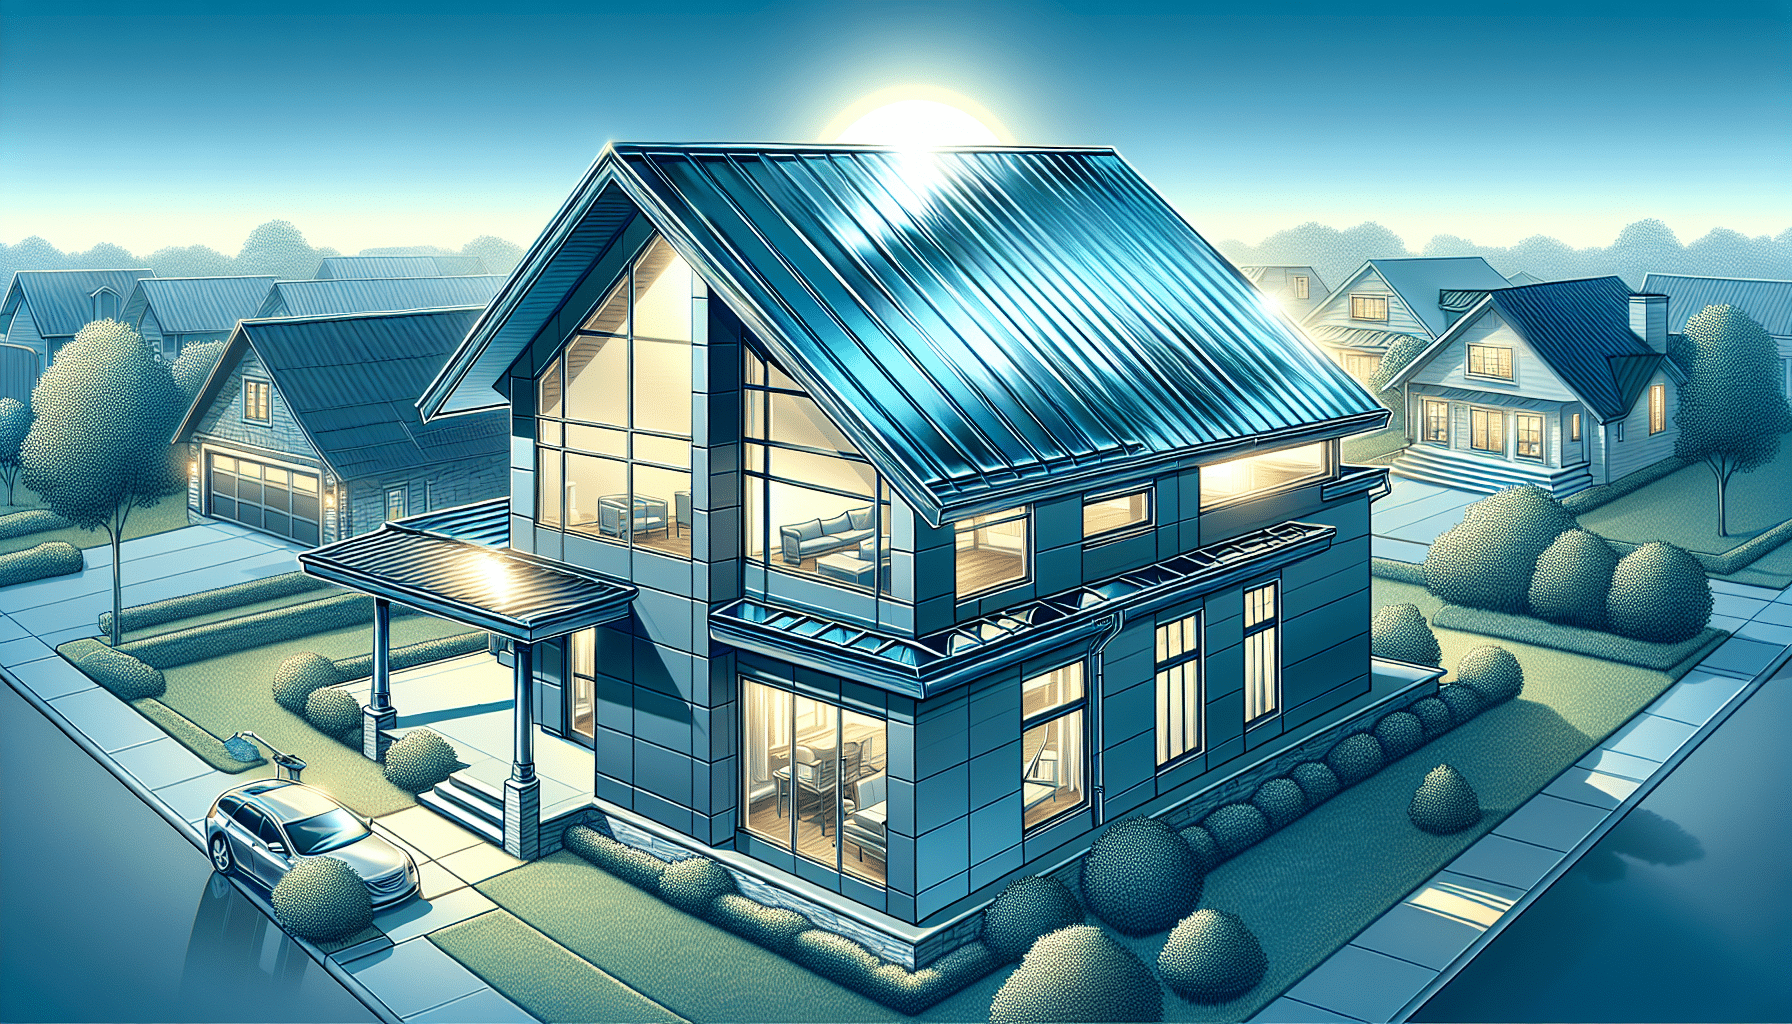 Illustration of metal roofing